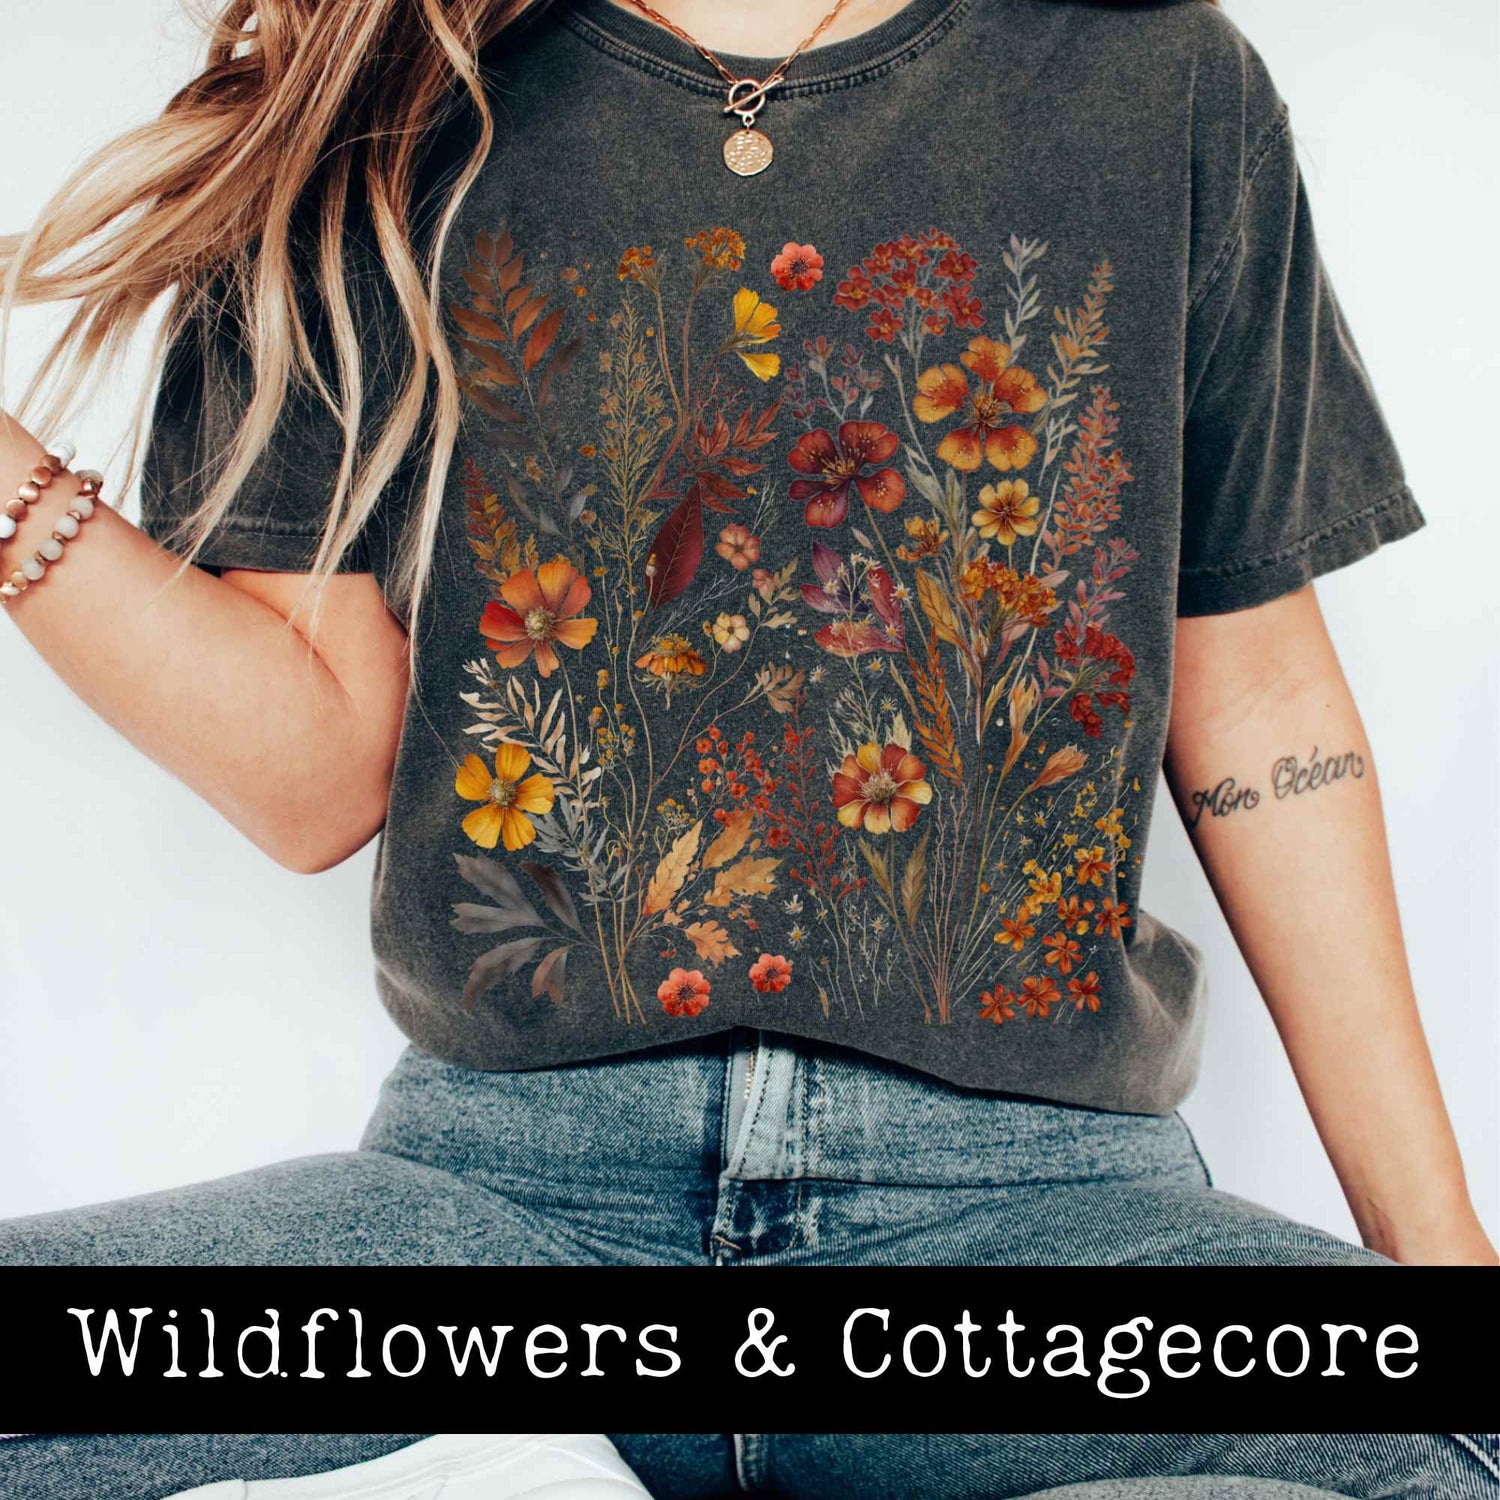 Wildflowers & Cottagecore